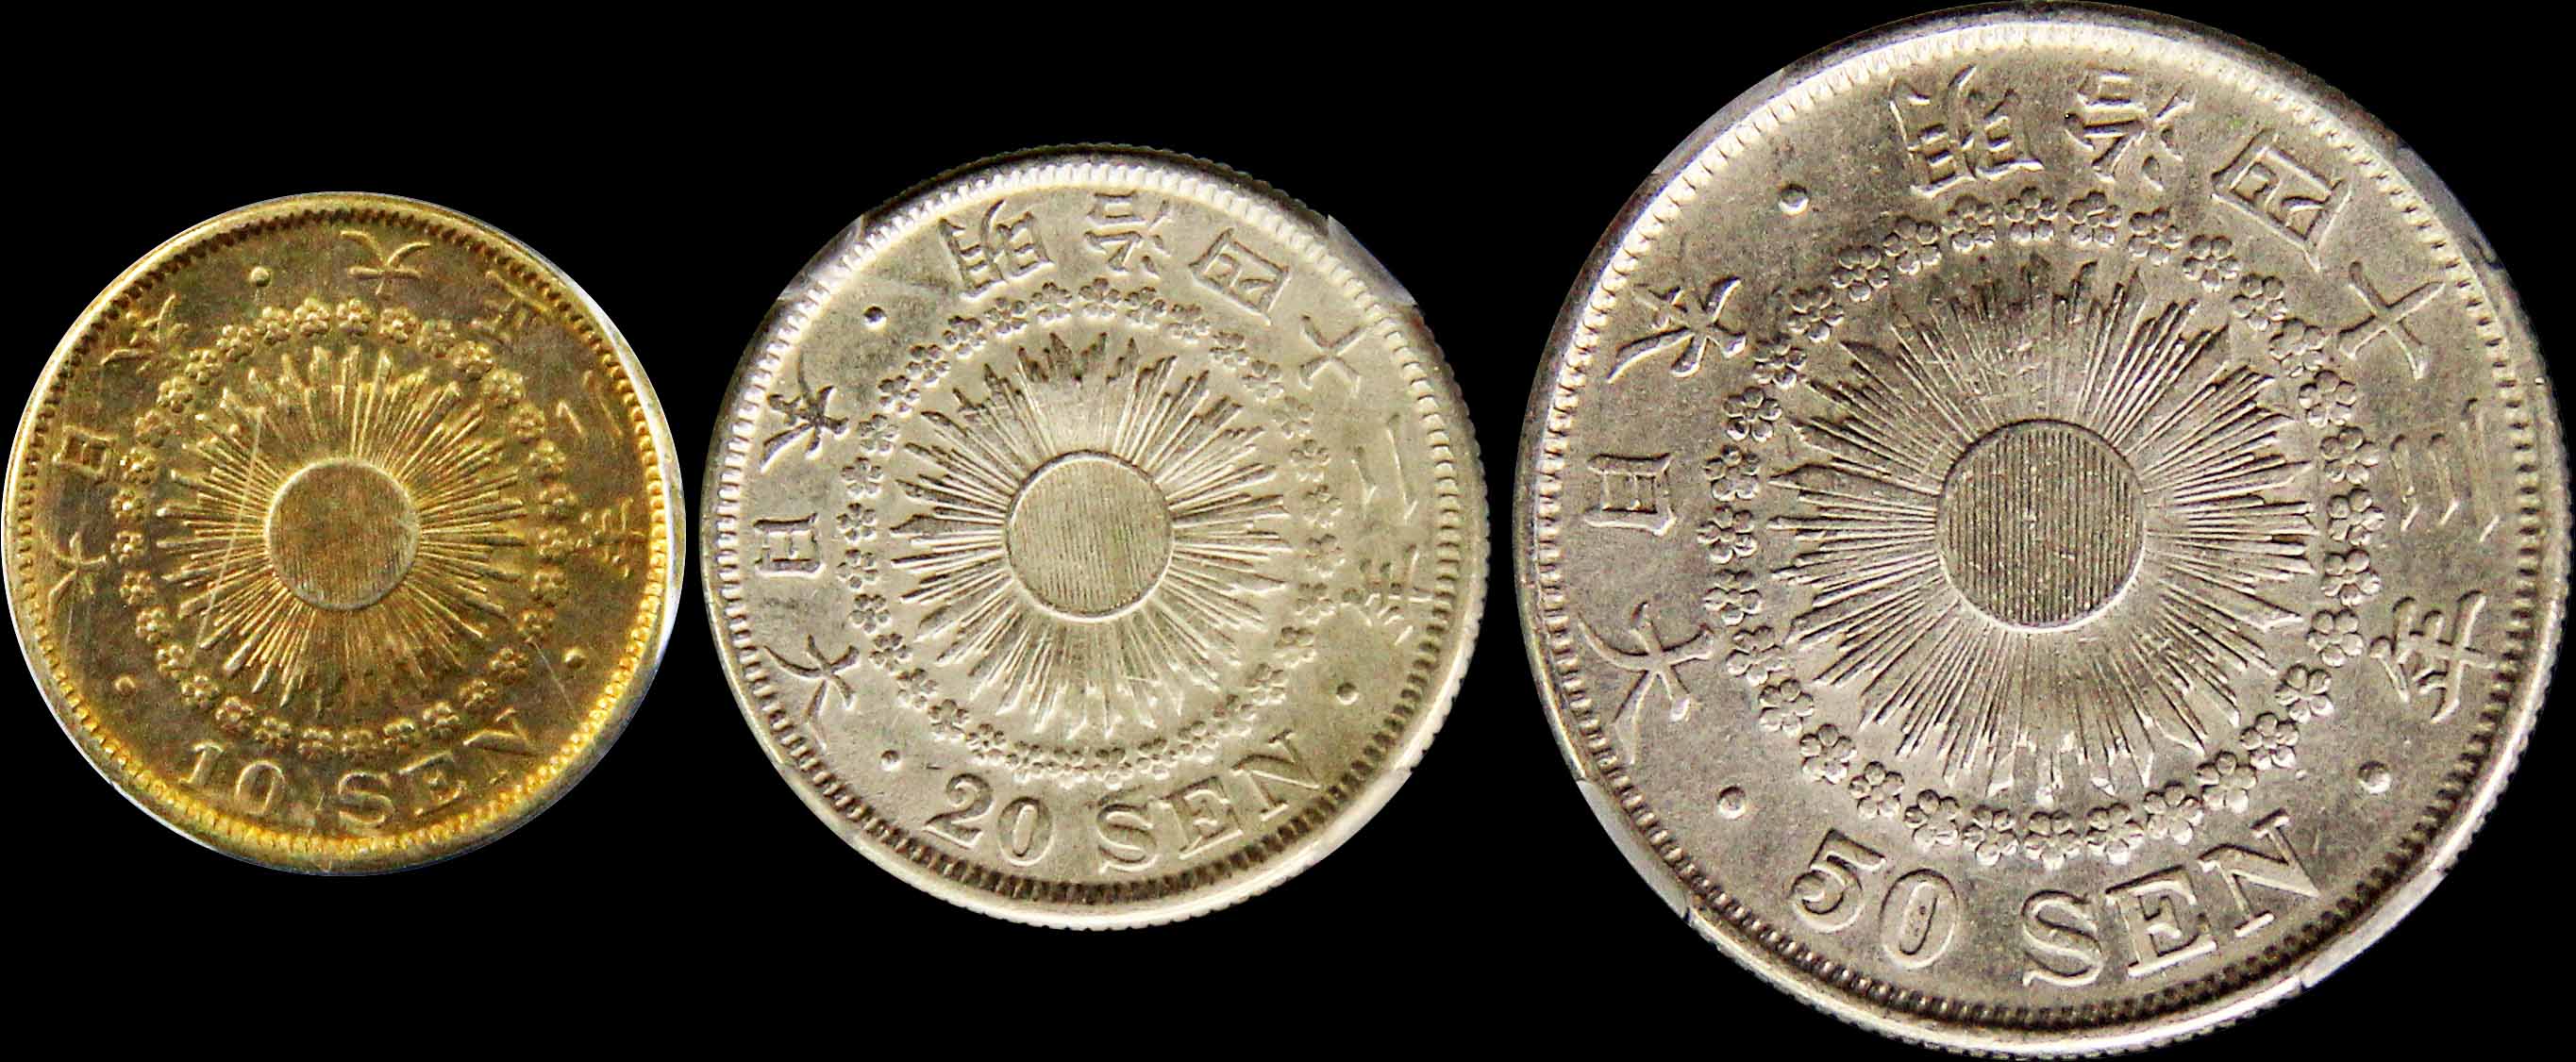 Japan, 1913/09/10, 10/20/50 Cents, Silver coin, GBCA MS64/ CCGA 